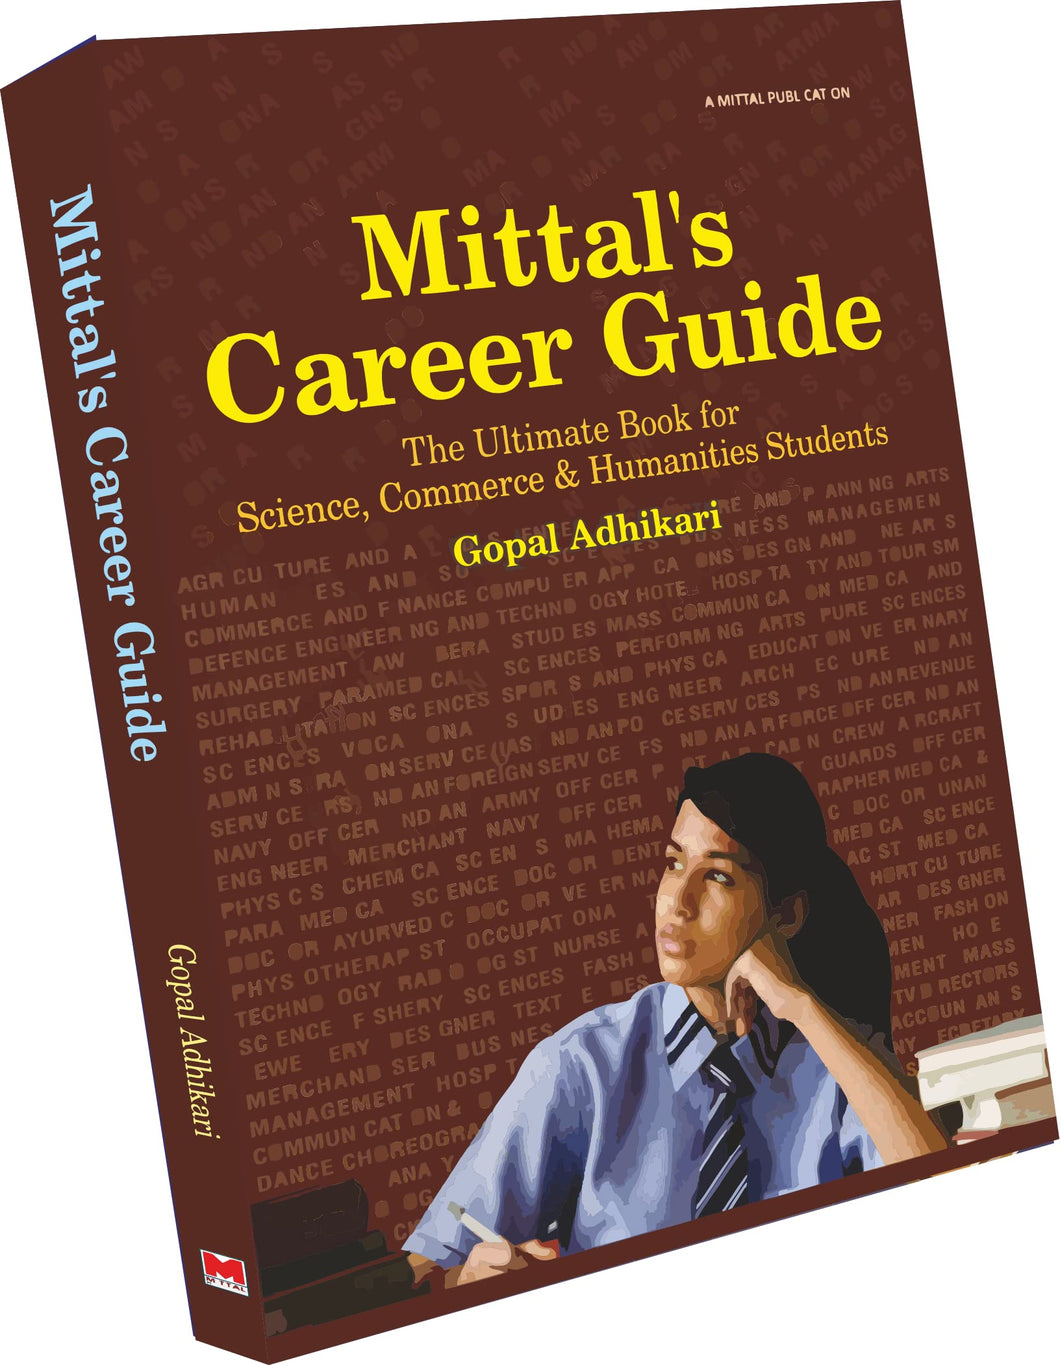 Mittals’s Career Guide [Paperback] by Gopal Adhikari